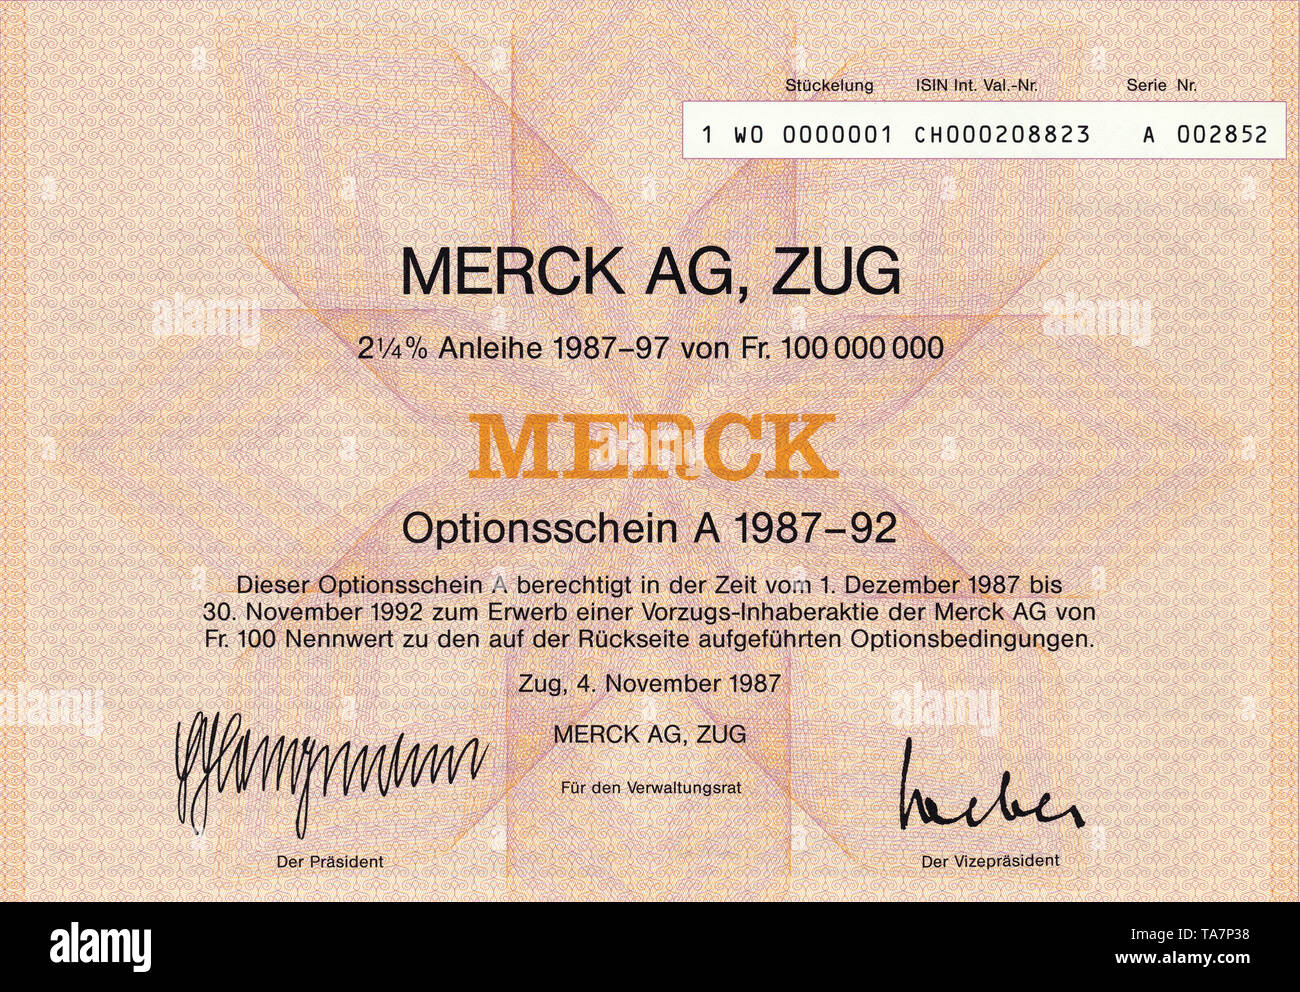 Historic Stock certificato, certificato di titoli al portatore, warrant, industria chimica e farmaceutica, Wertpapier, Inhaber-Optionsschein, Schweizer Franken, Chemie- und Pharmaindustrie, Merck AG, Zugo, 1987, Schweiz, Europa Foto Stock